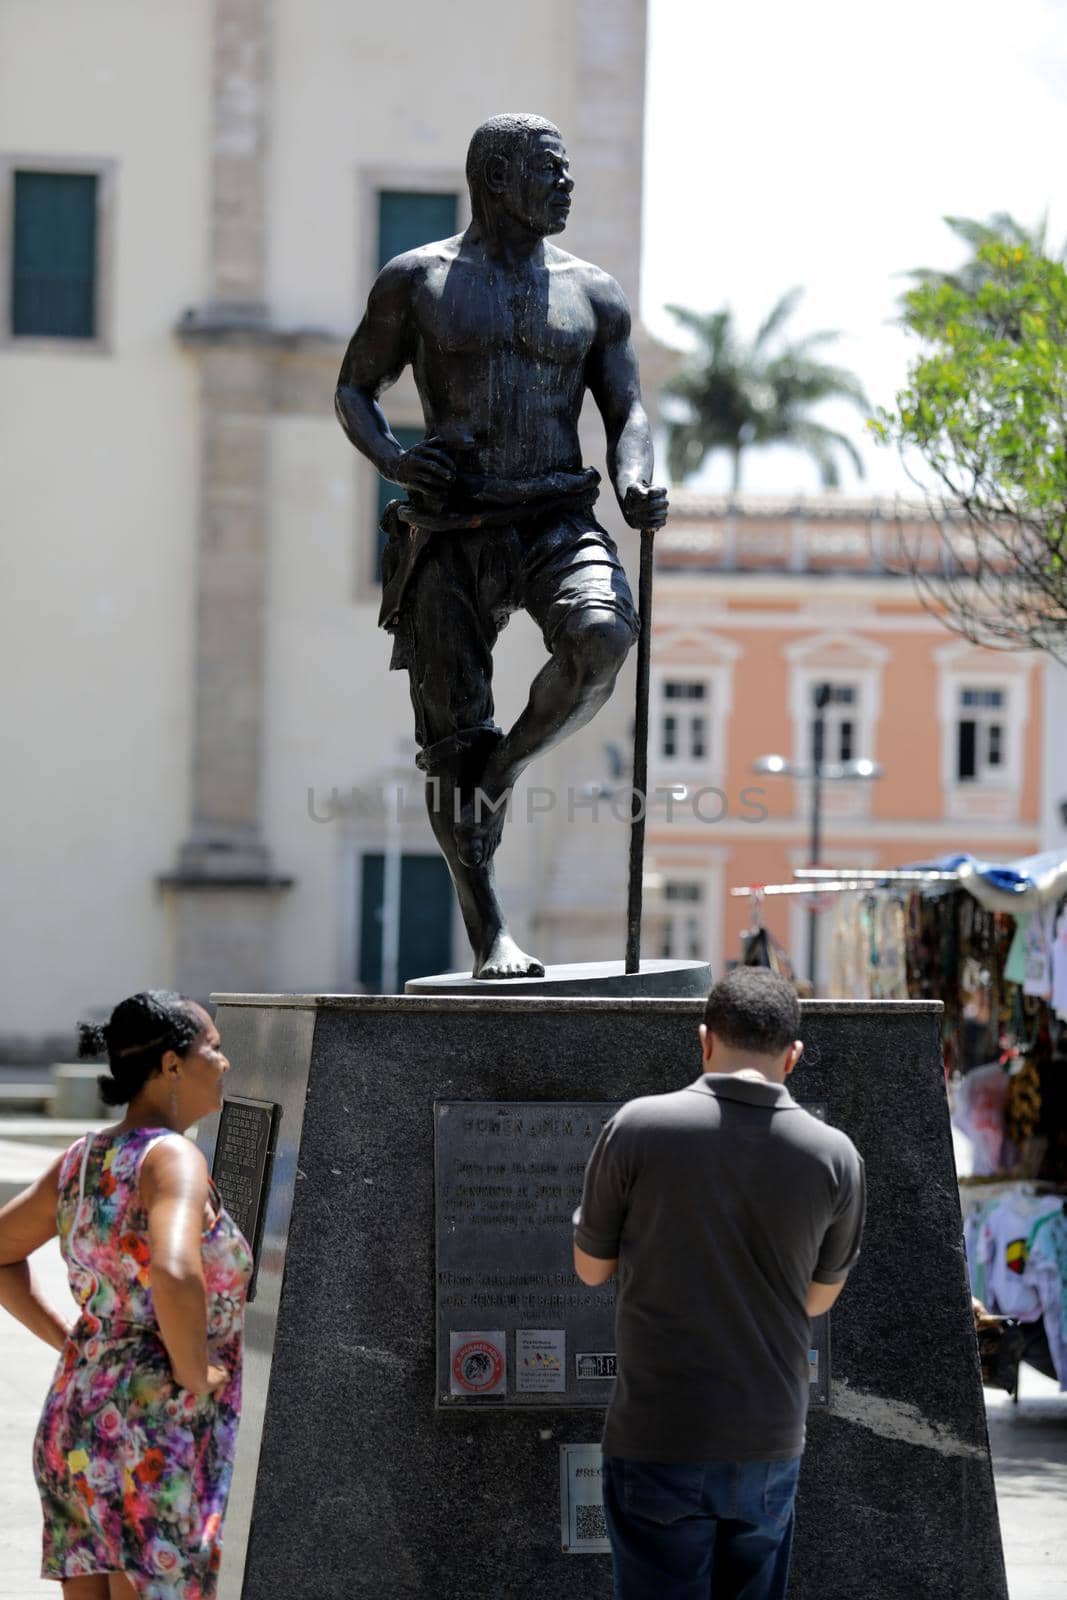 salvador, bahia, brazil - october 8, 2019: Sculpture of black leader Zumbi dos Palmares seen at Se square in Salvador city.